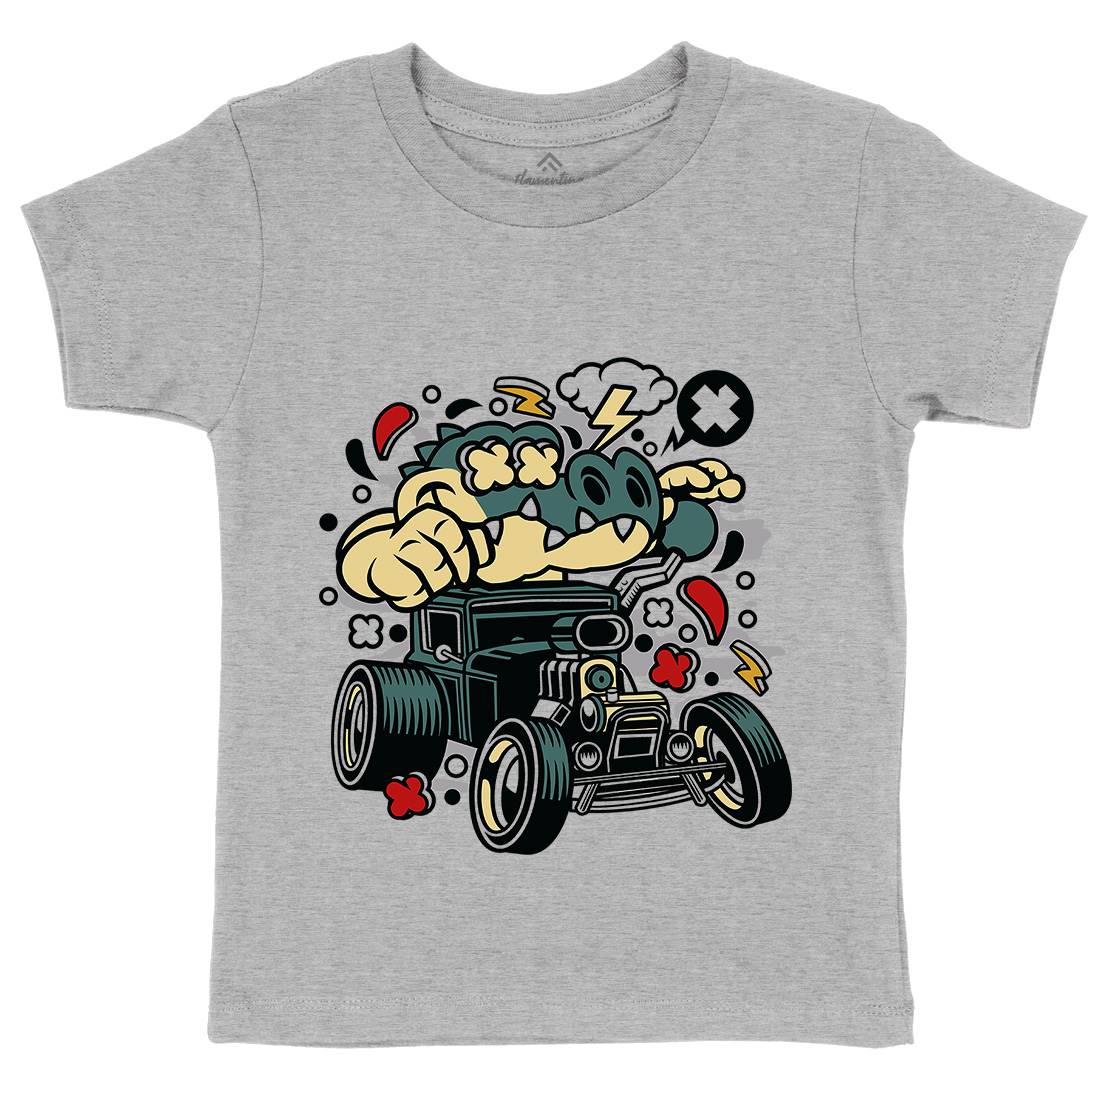 Crocodile Hotrod Kids Crew Neck T-Shirt Cars C532